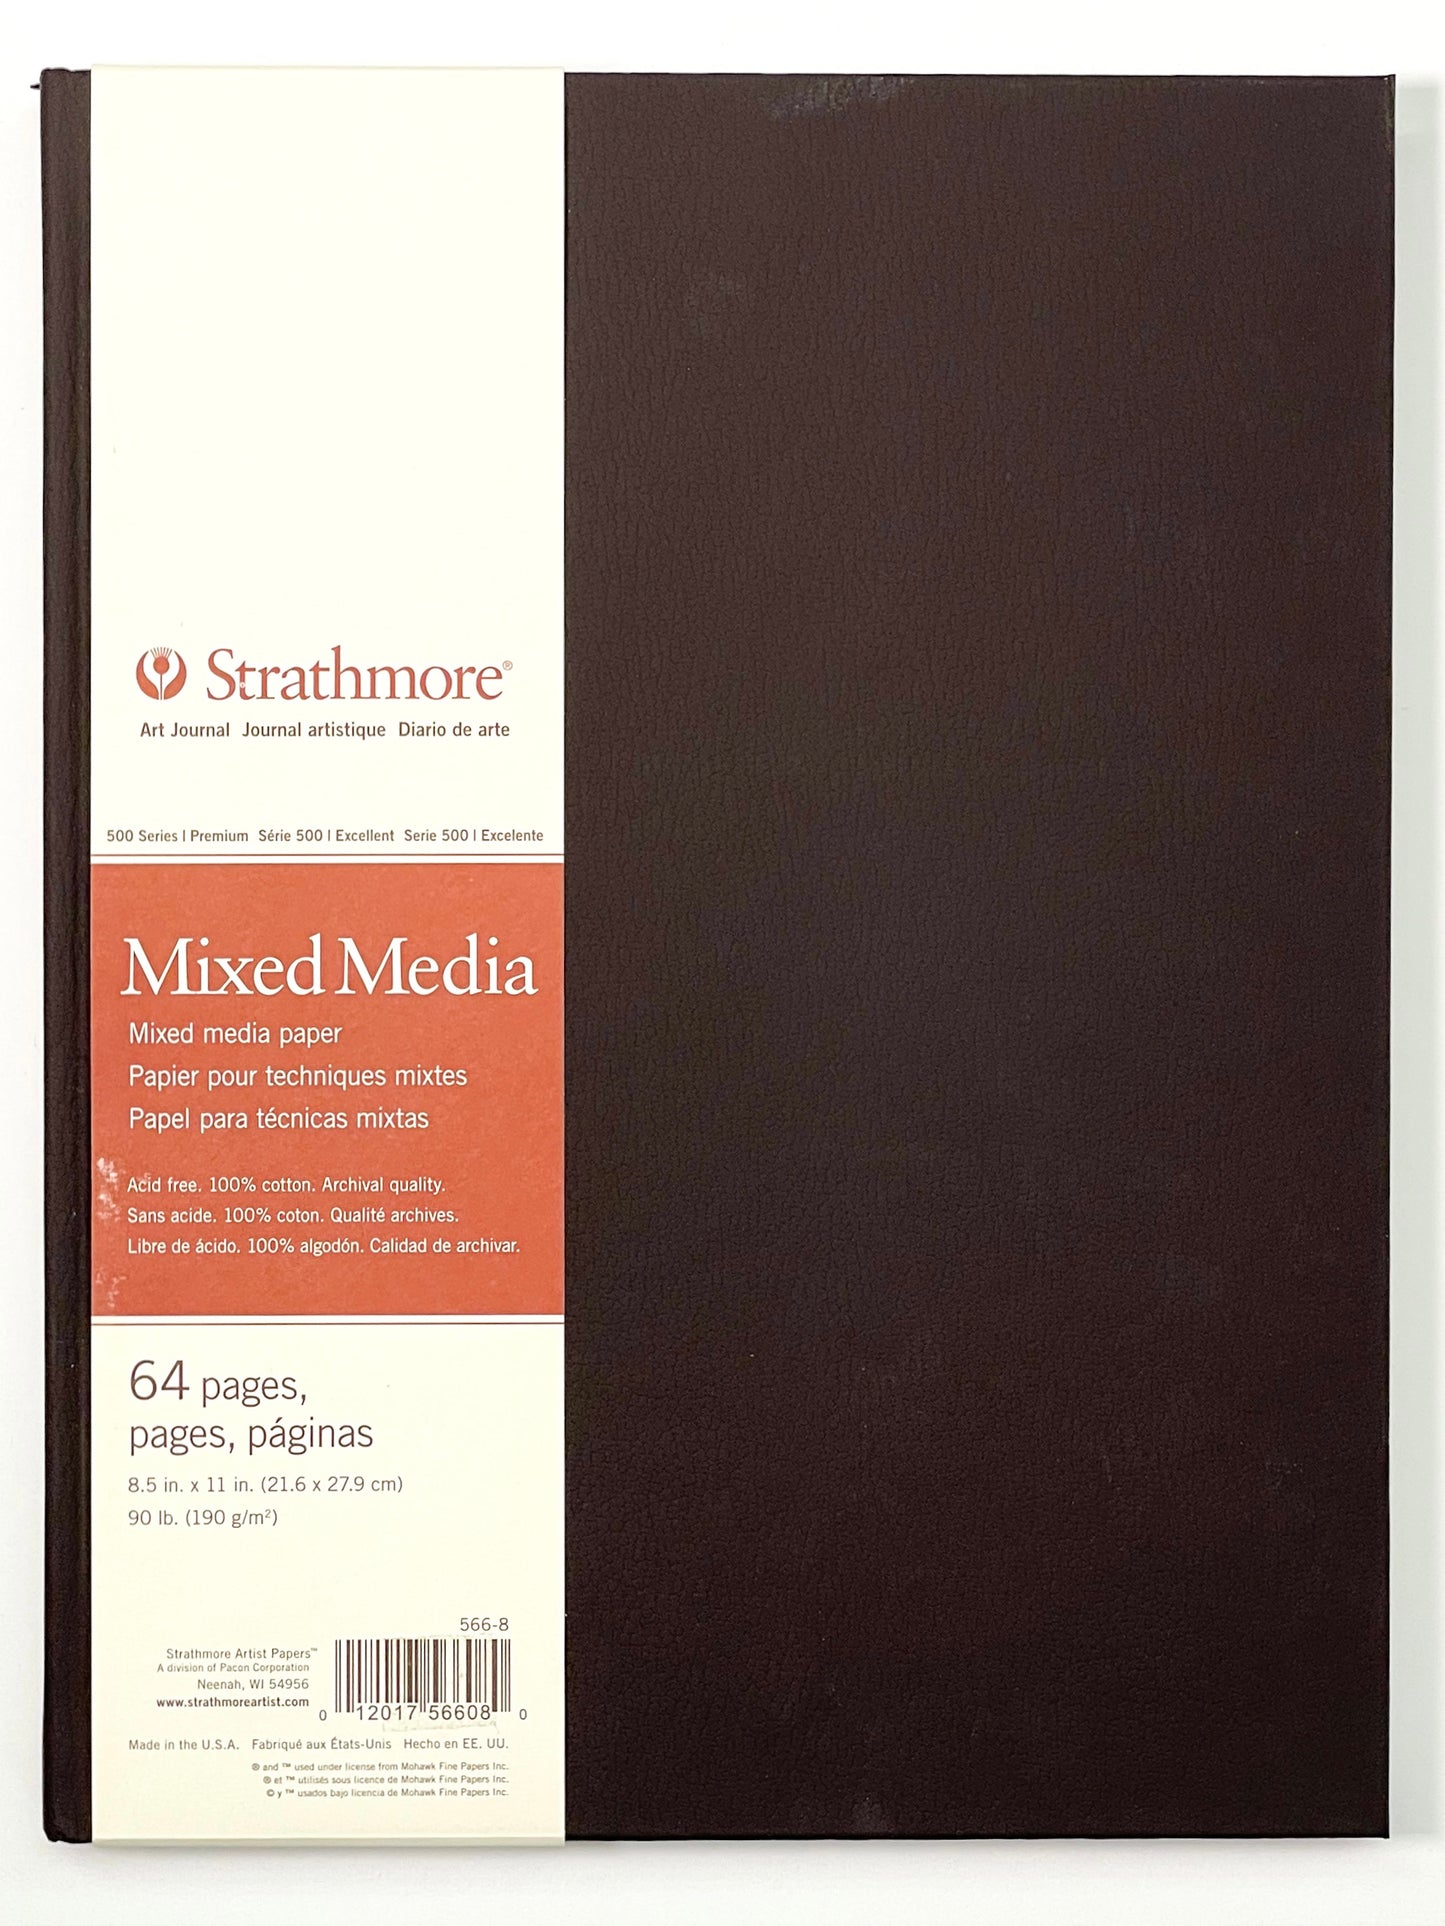 Strathmore 500 series Mixed Media Hardbound Art Journal (8.5"x11") Mona Lisa Artists' Materials